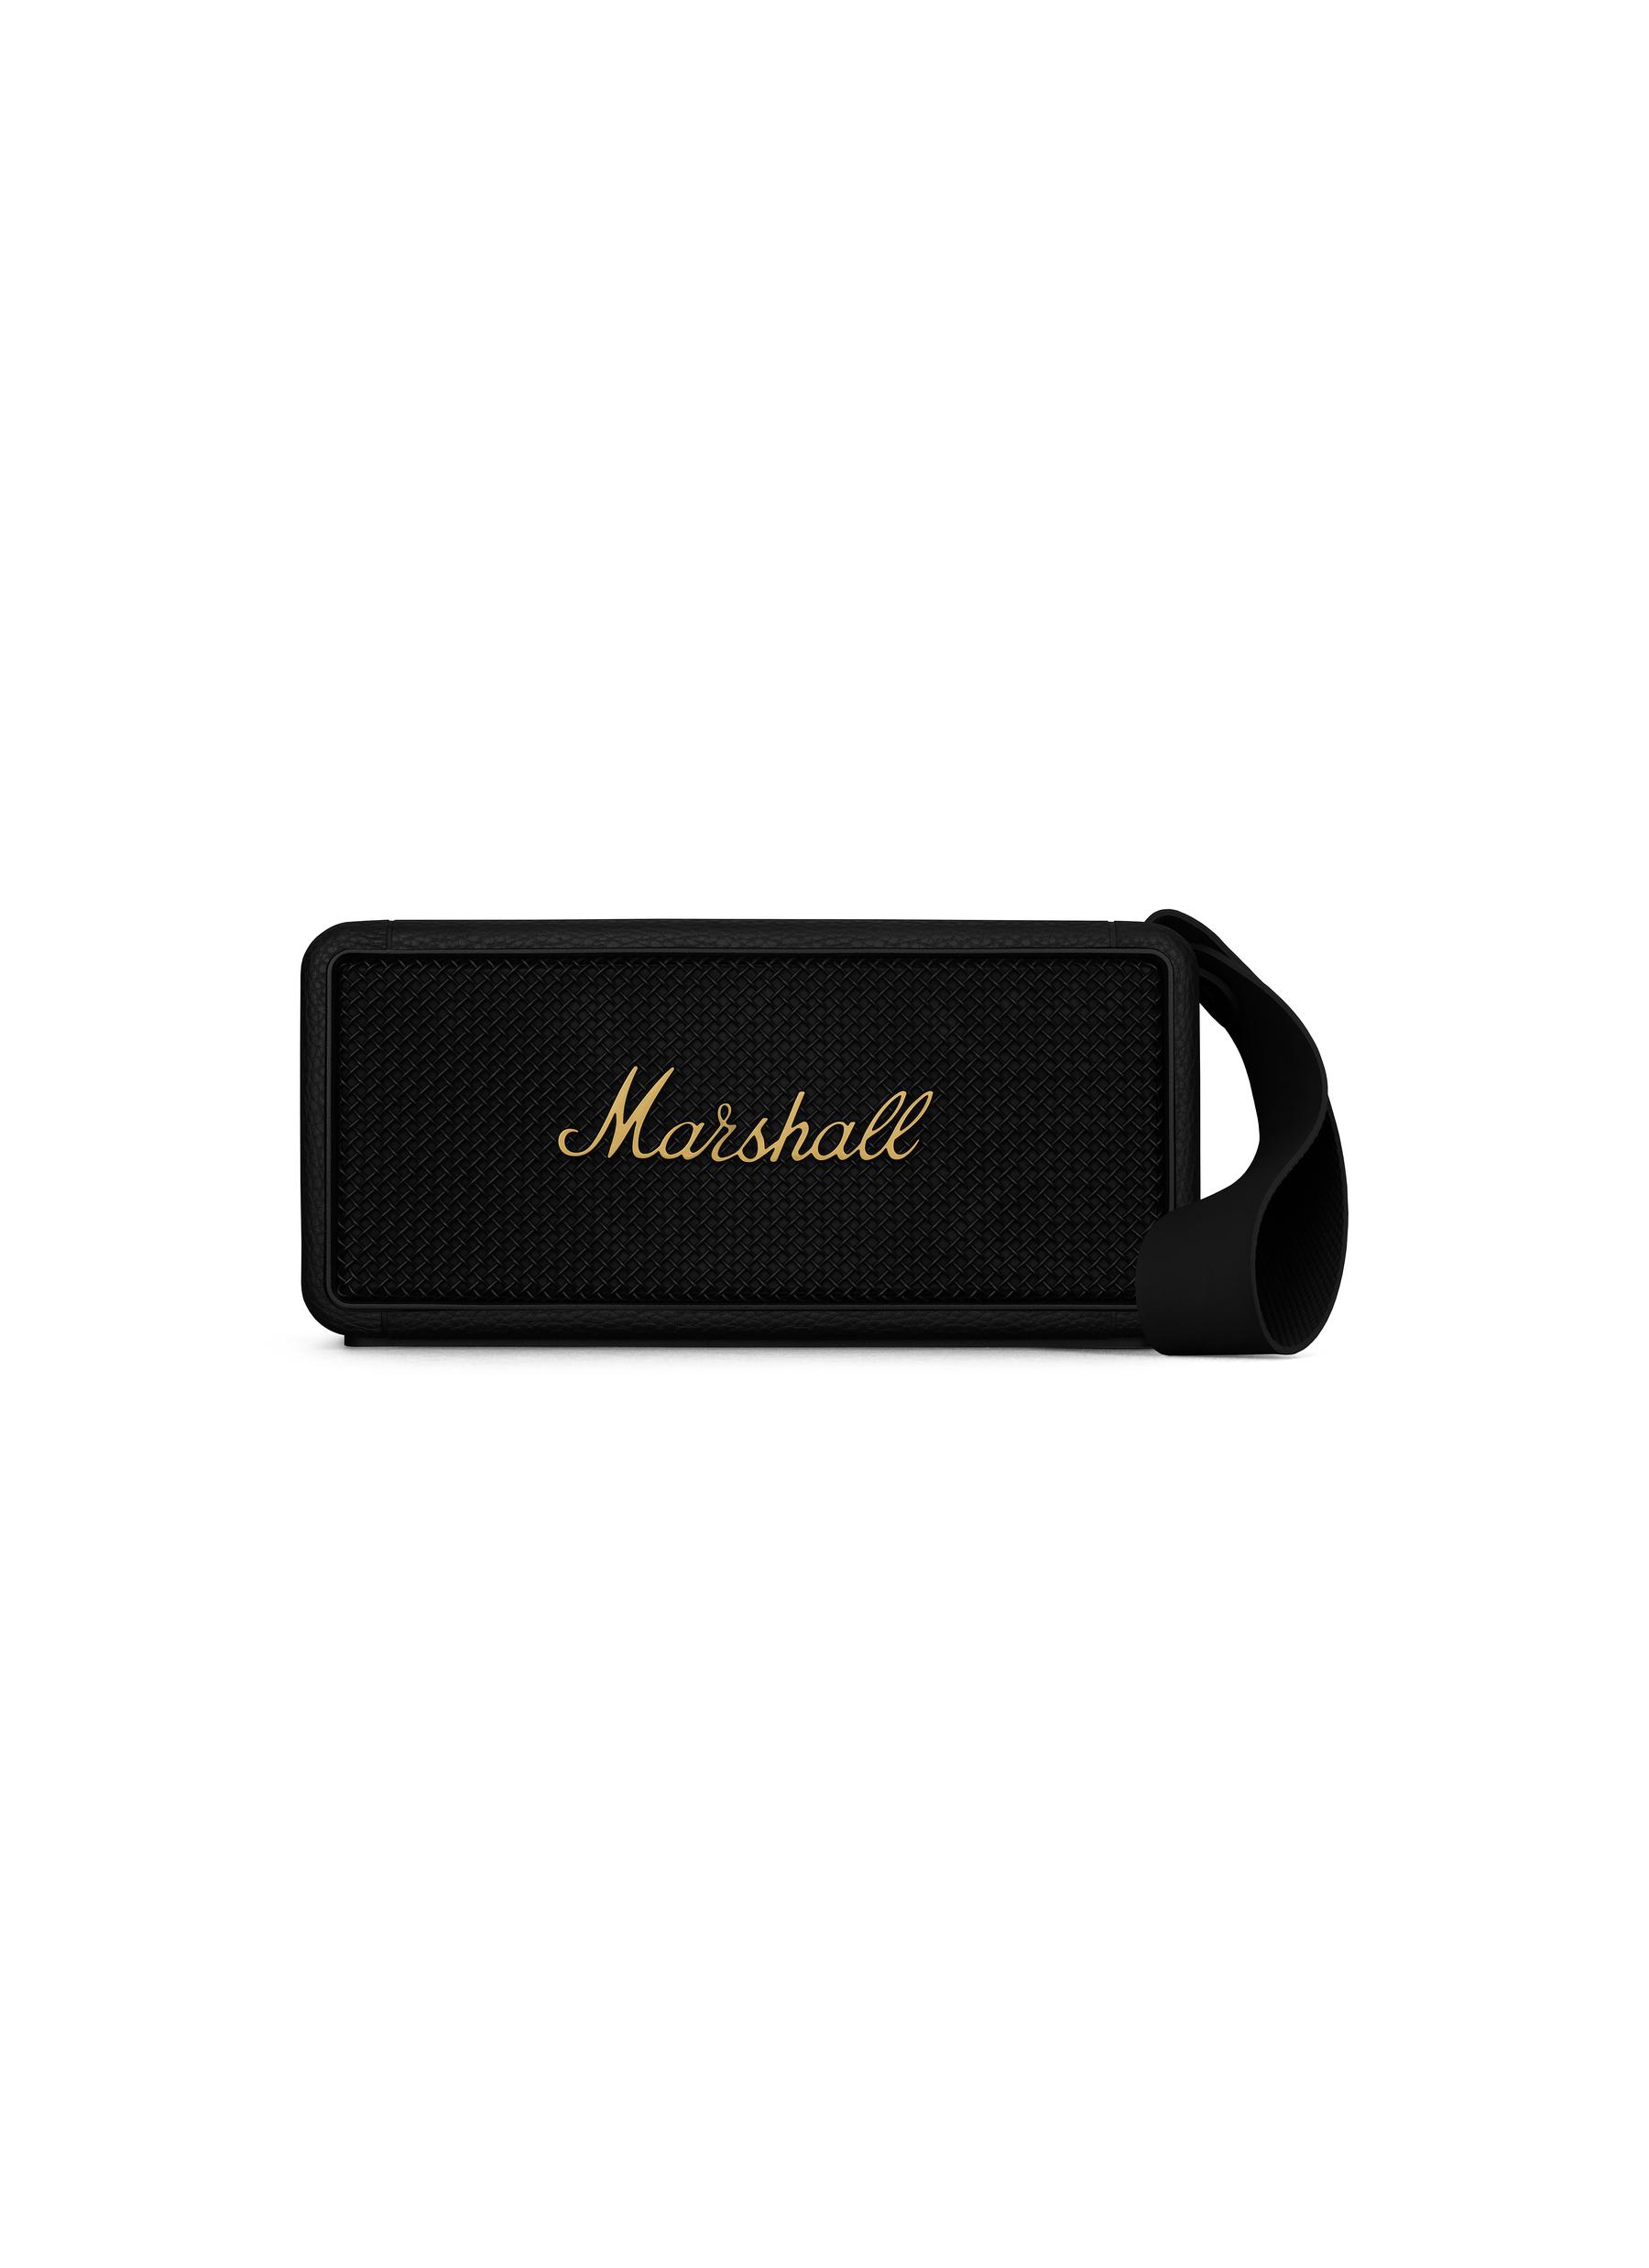 Buy Marshall Middleton Online in Singapore